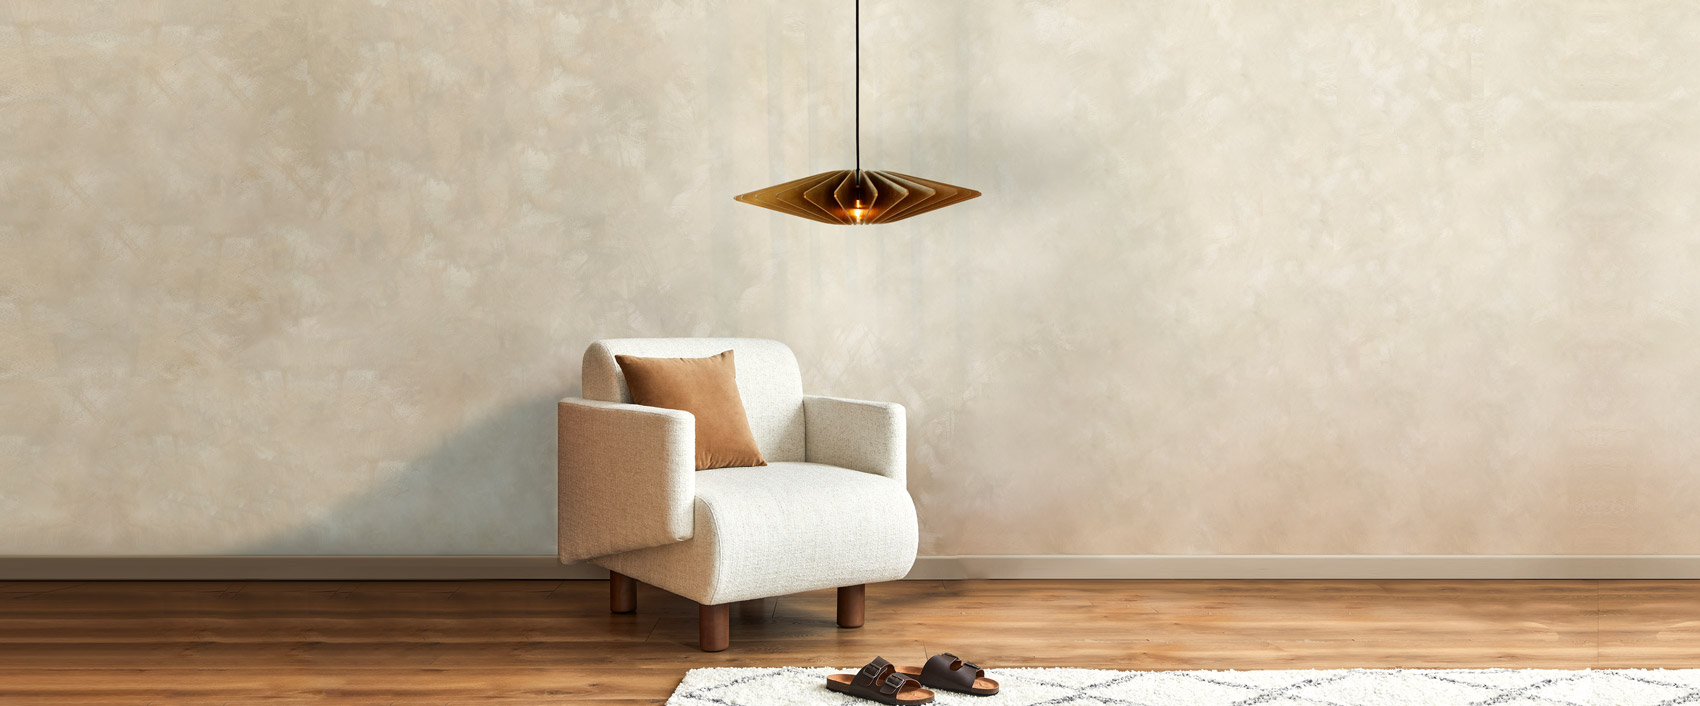 Modern cozy lighting, golden pendants light creates the desired warm interior atmosphere, golden paint